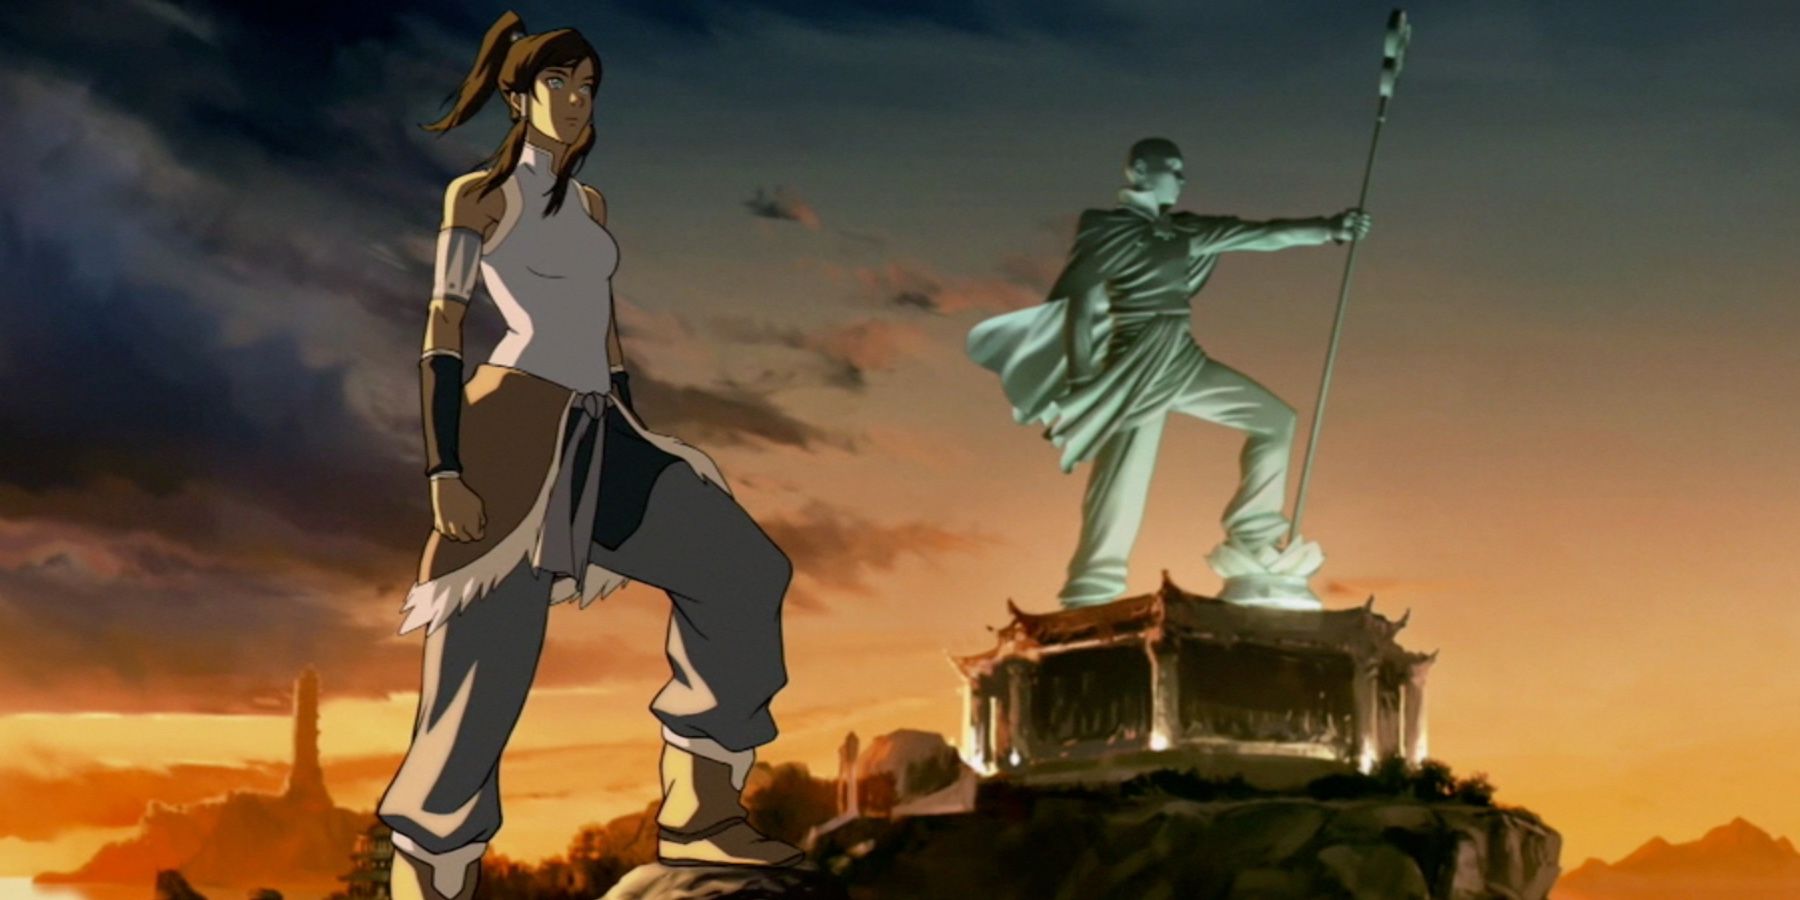 Korra poses in front of Aang's Statue in Republic City